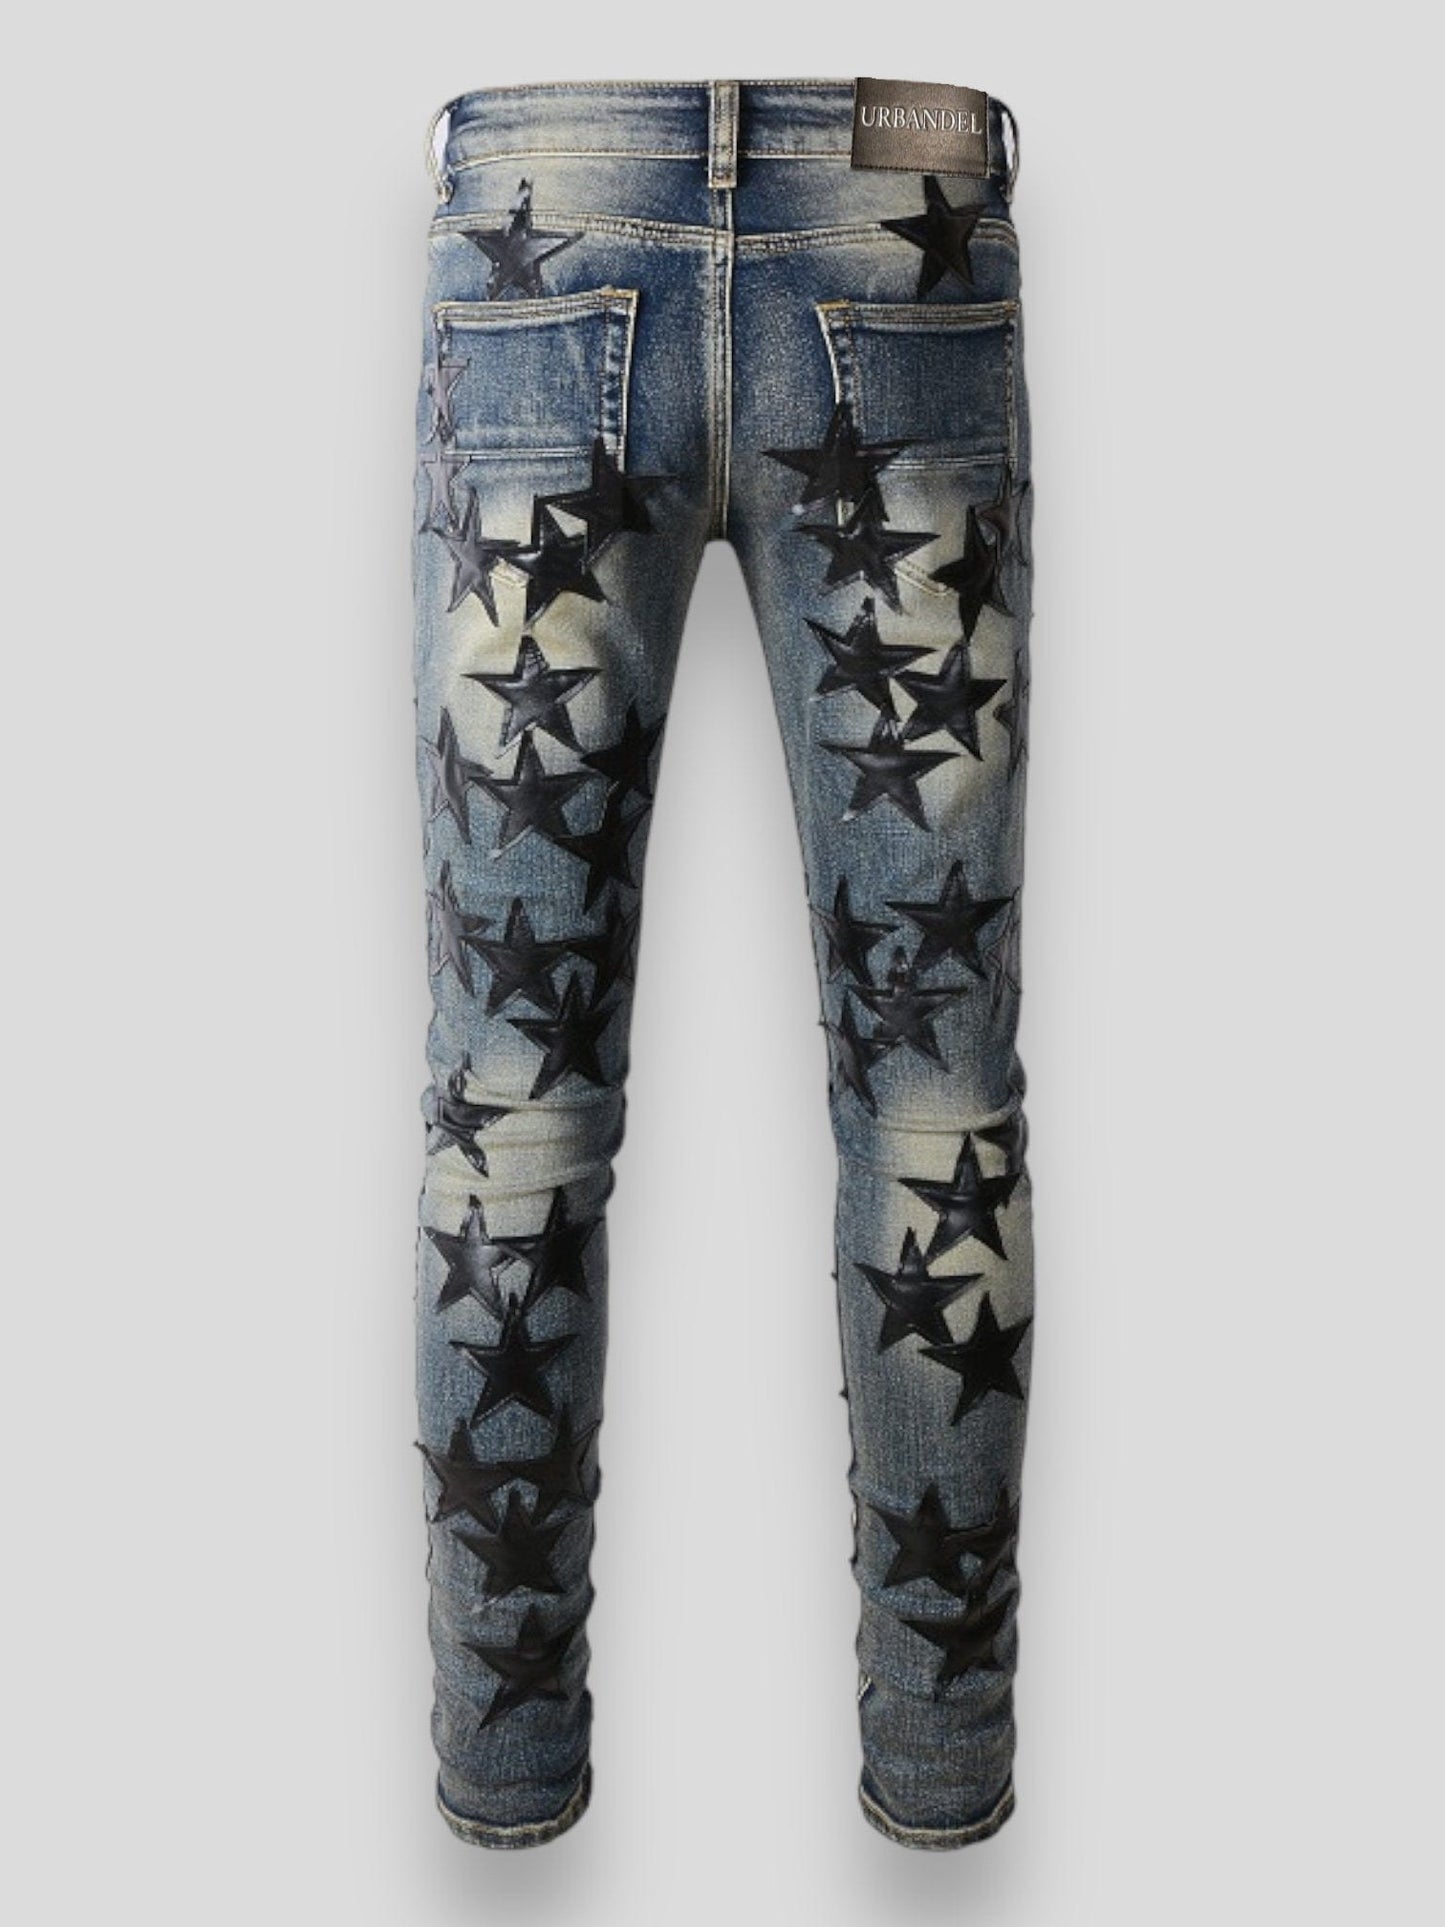 Urbandel pants Urbandel "A Star is Born Again Skinny Jeans